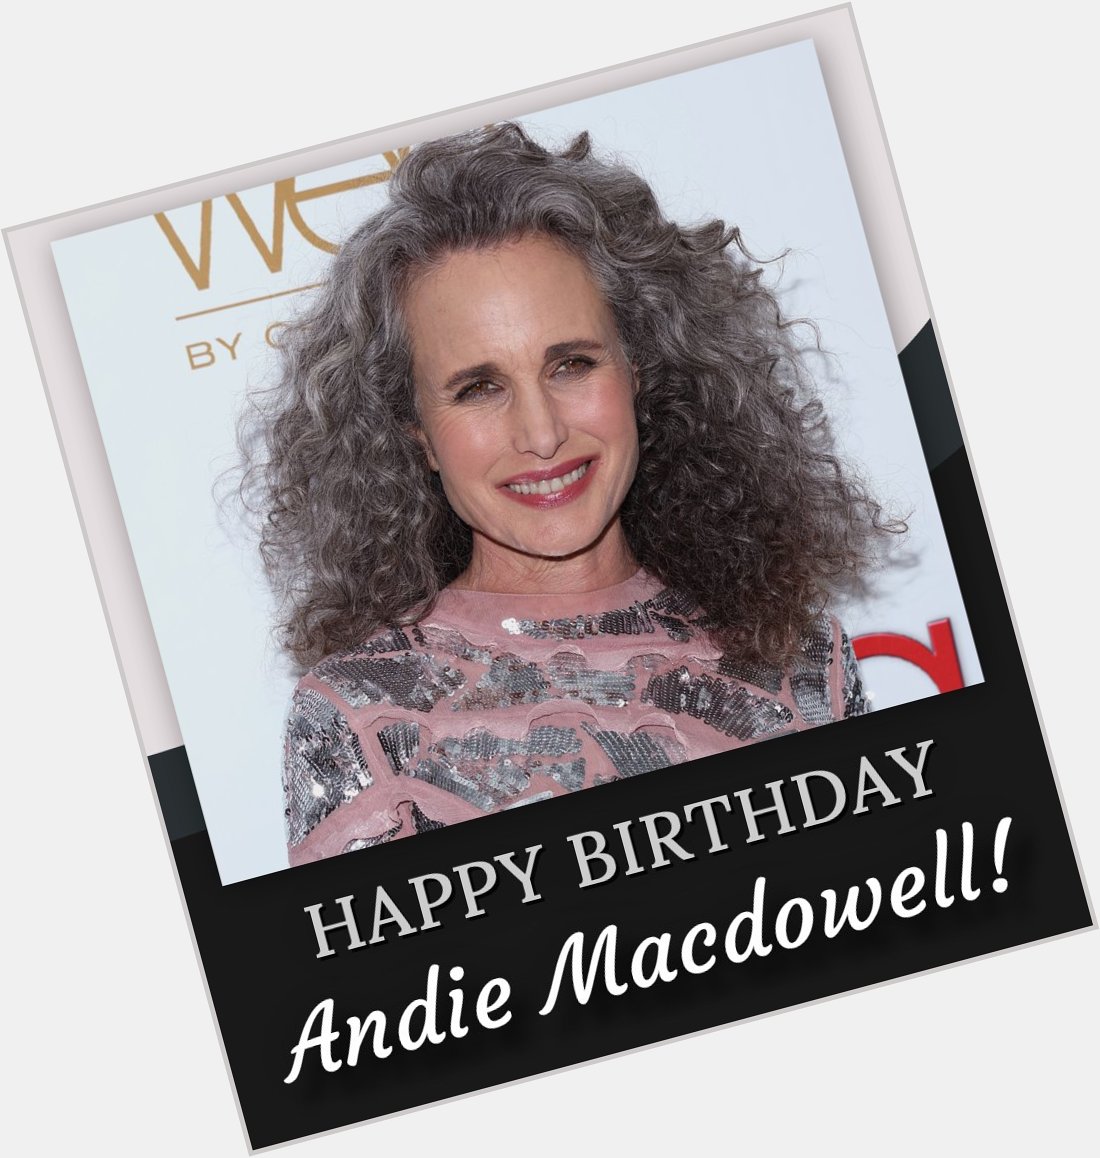 Happy birthday, Andie Macdowell! 